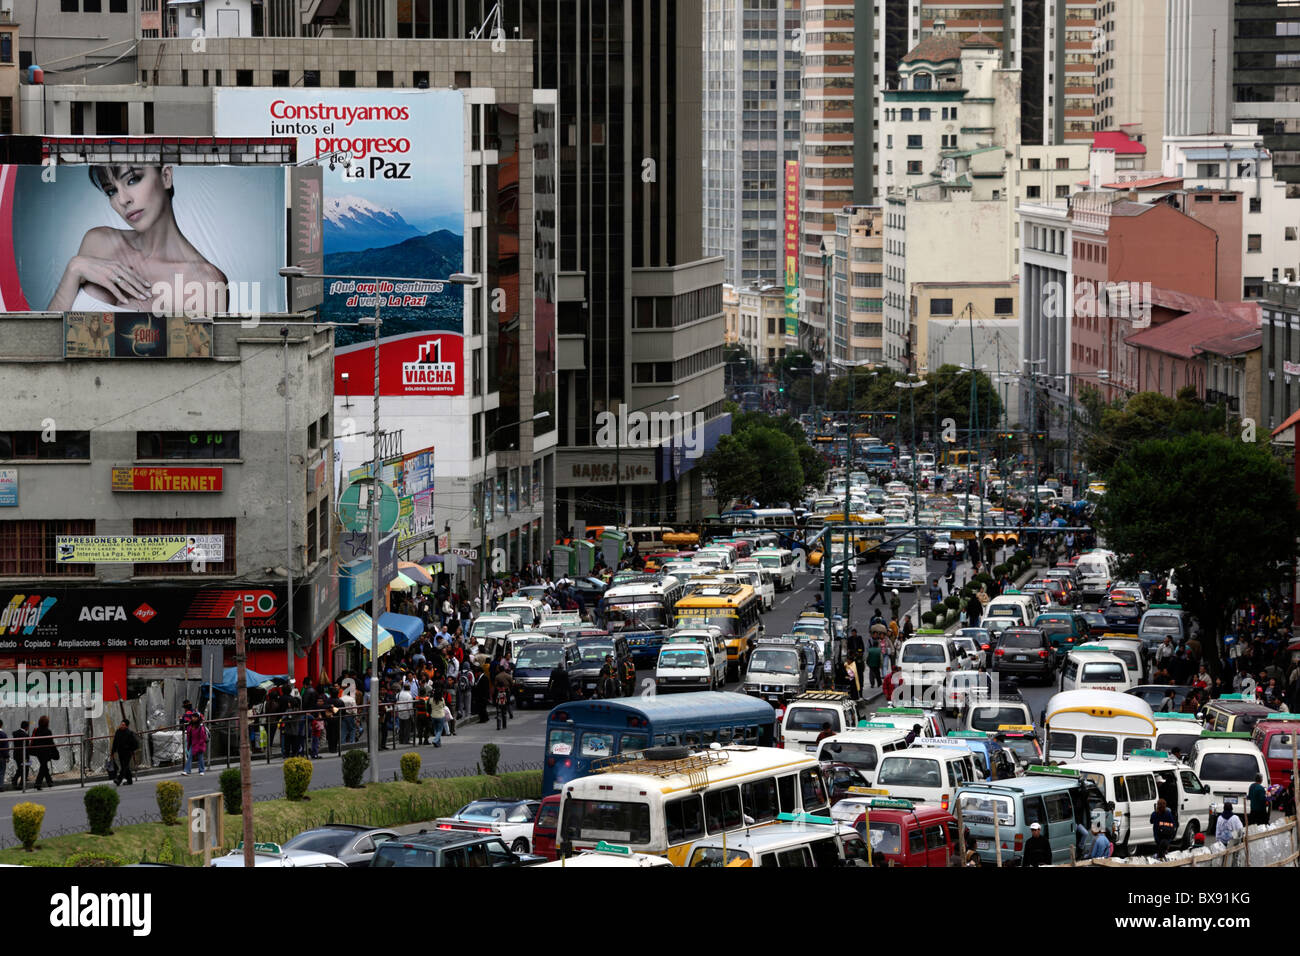 Traffic congestion / gridlock on main Avenida Mariscal Santa Cruz street through the centre of La Paz city, Bolivia Stock Photo